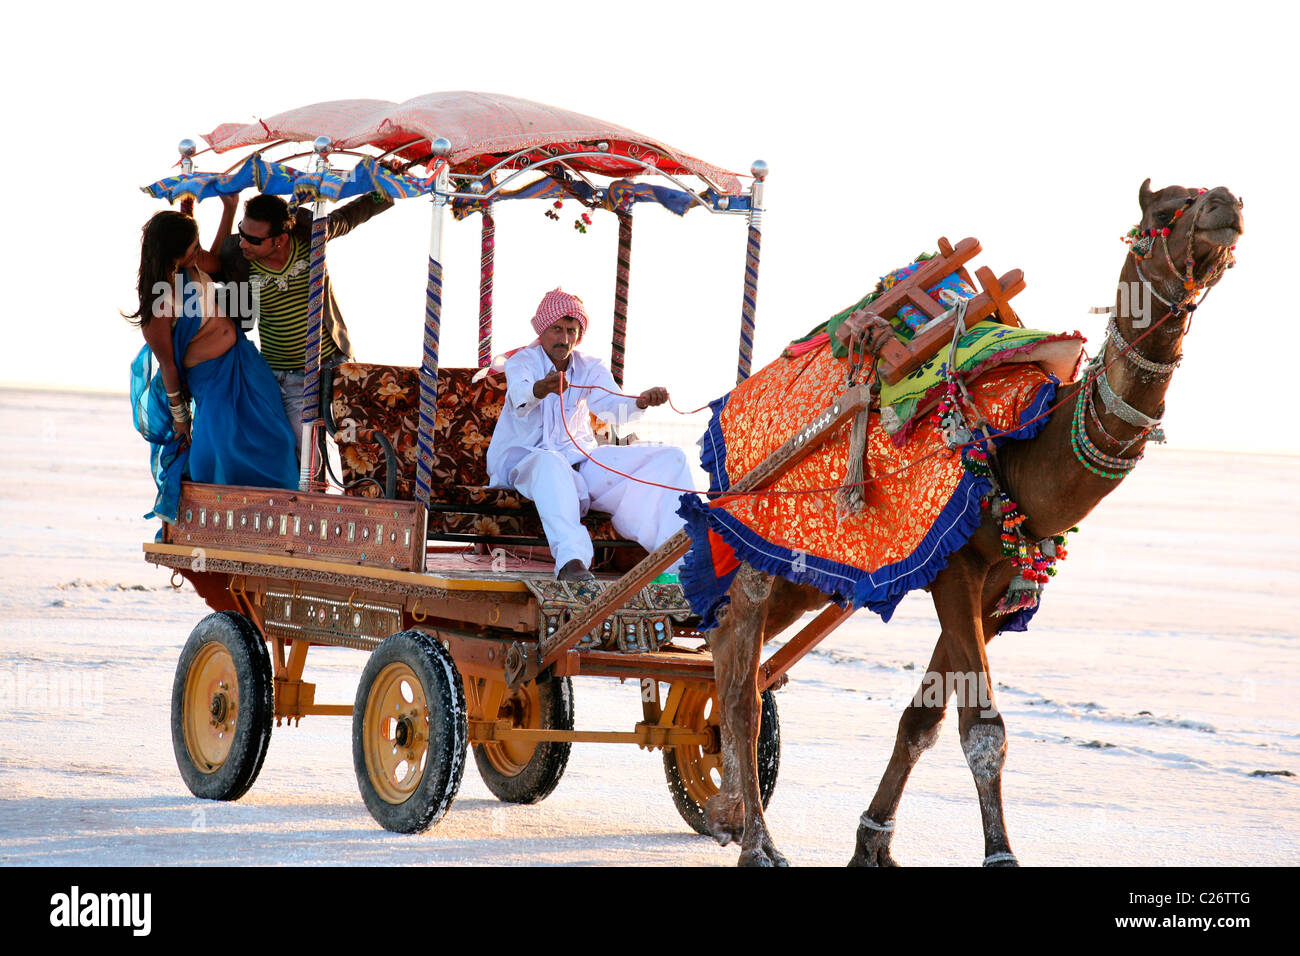 boy-and-girl-in-romantic-pose-at-camel-cart-in-rann-of-kutch-india-C26TTG.jpg